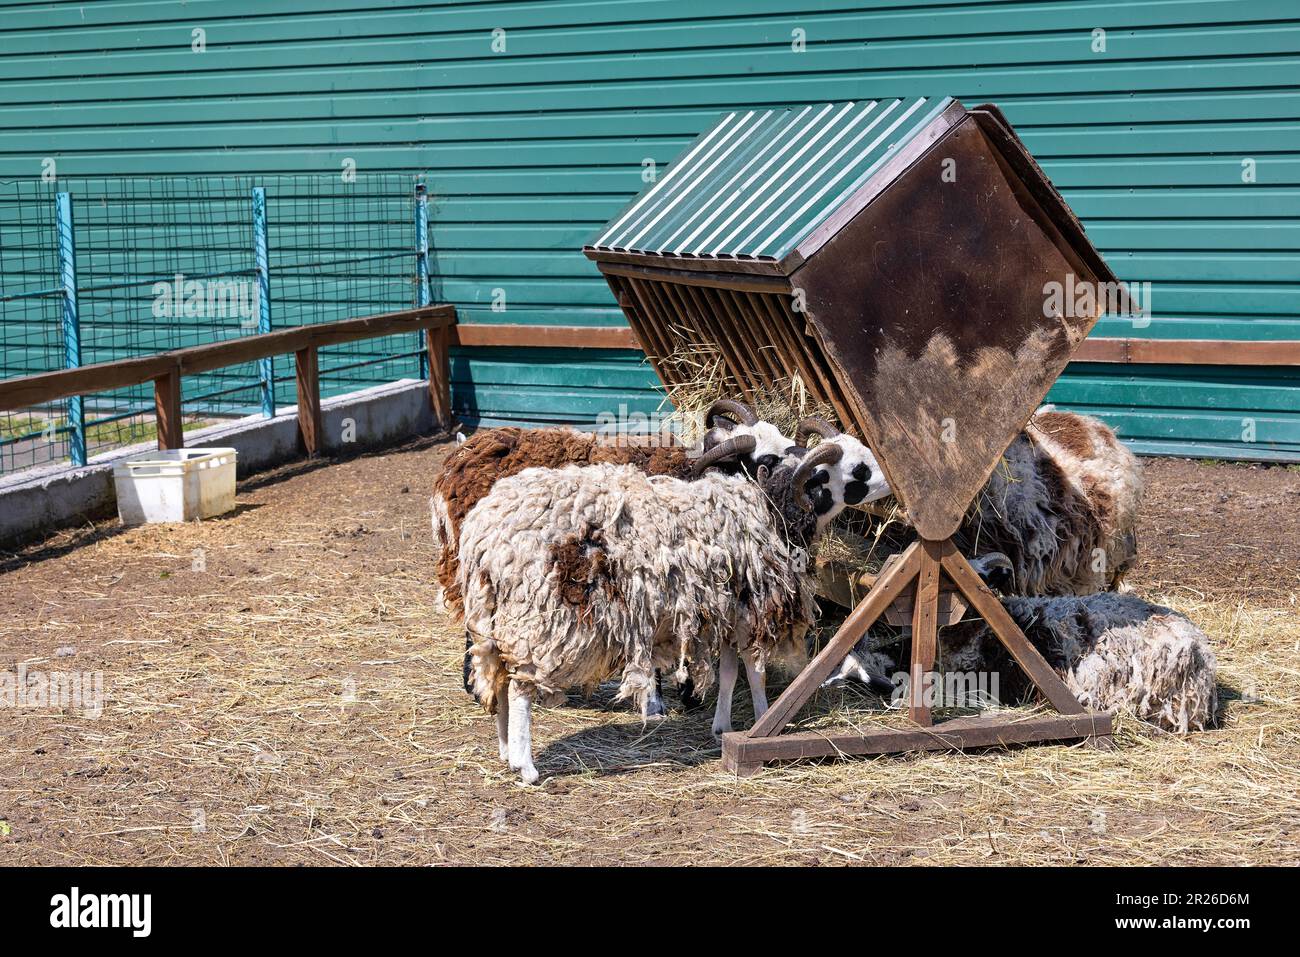 A flock of shaggy sheep grazes hay near a wooden manger. Stock Photo